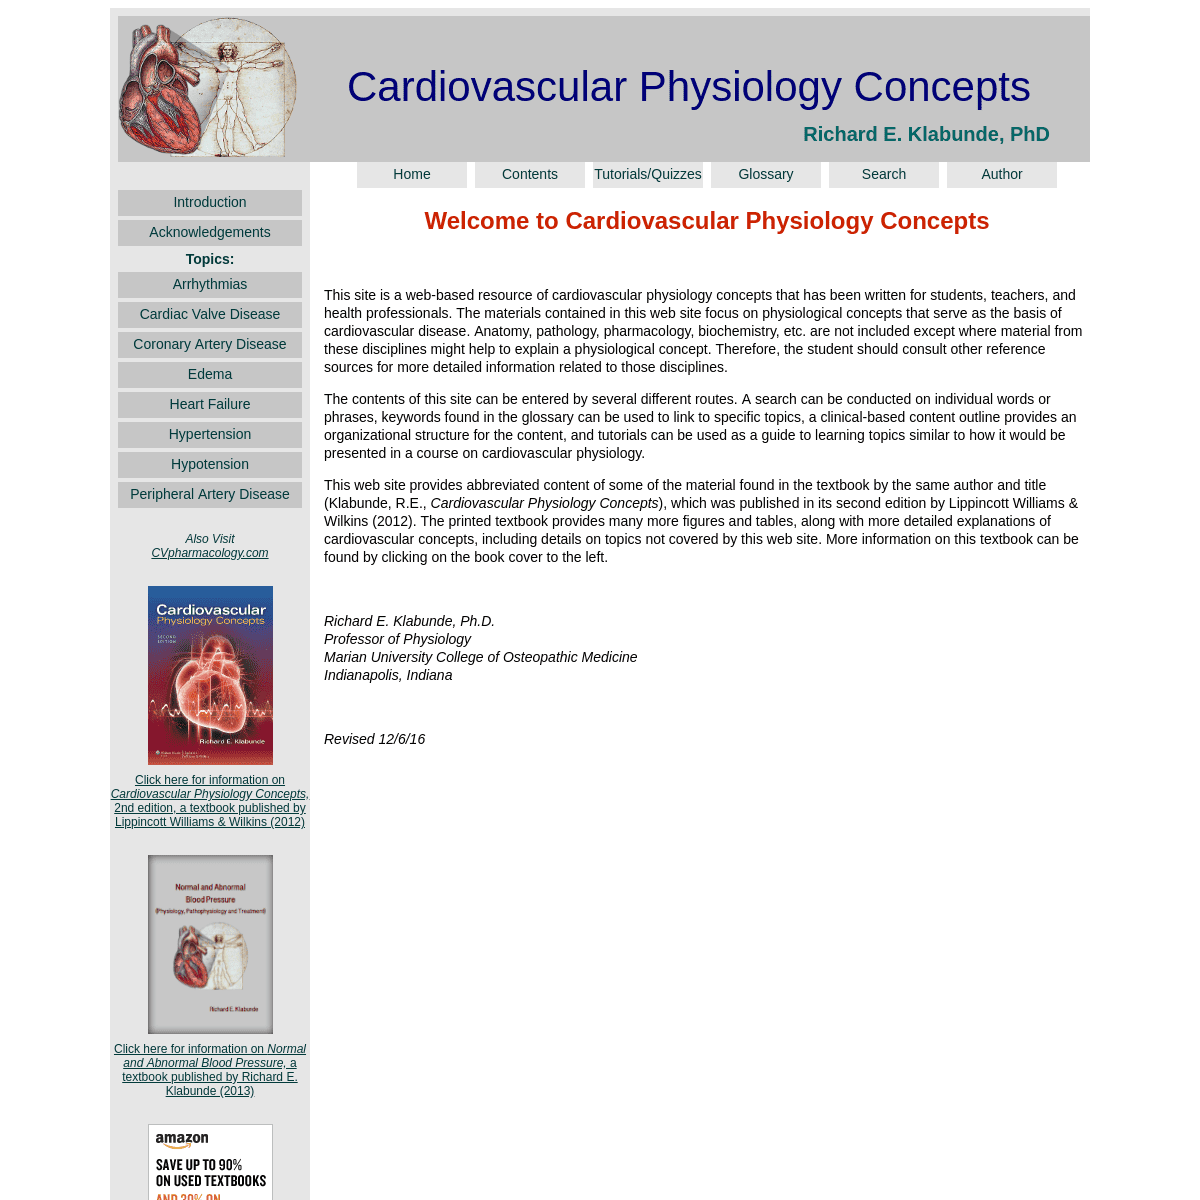 A complete backup of cvphysiology.com